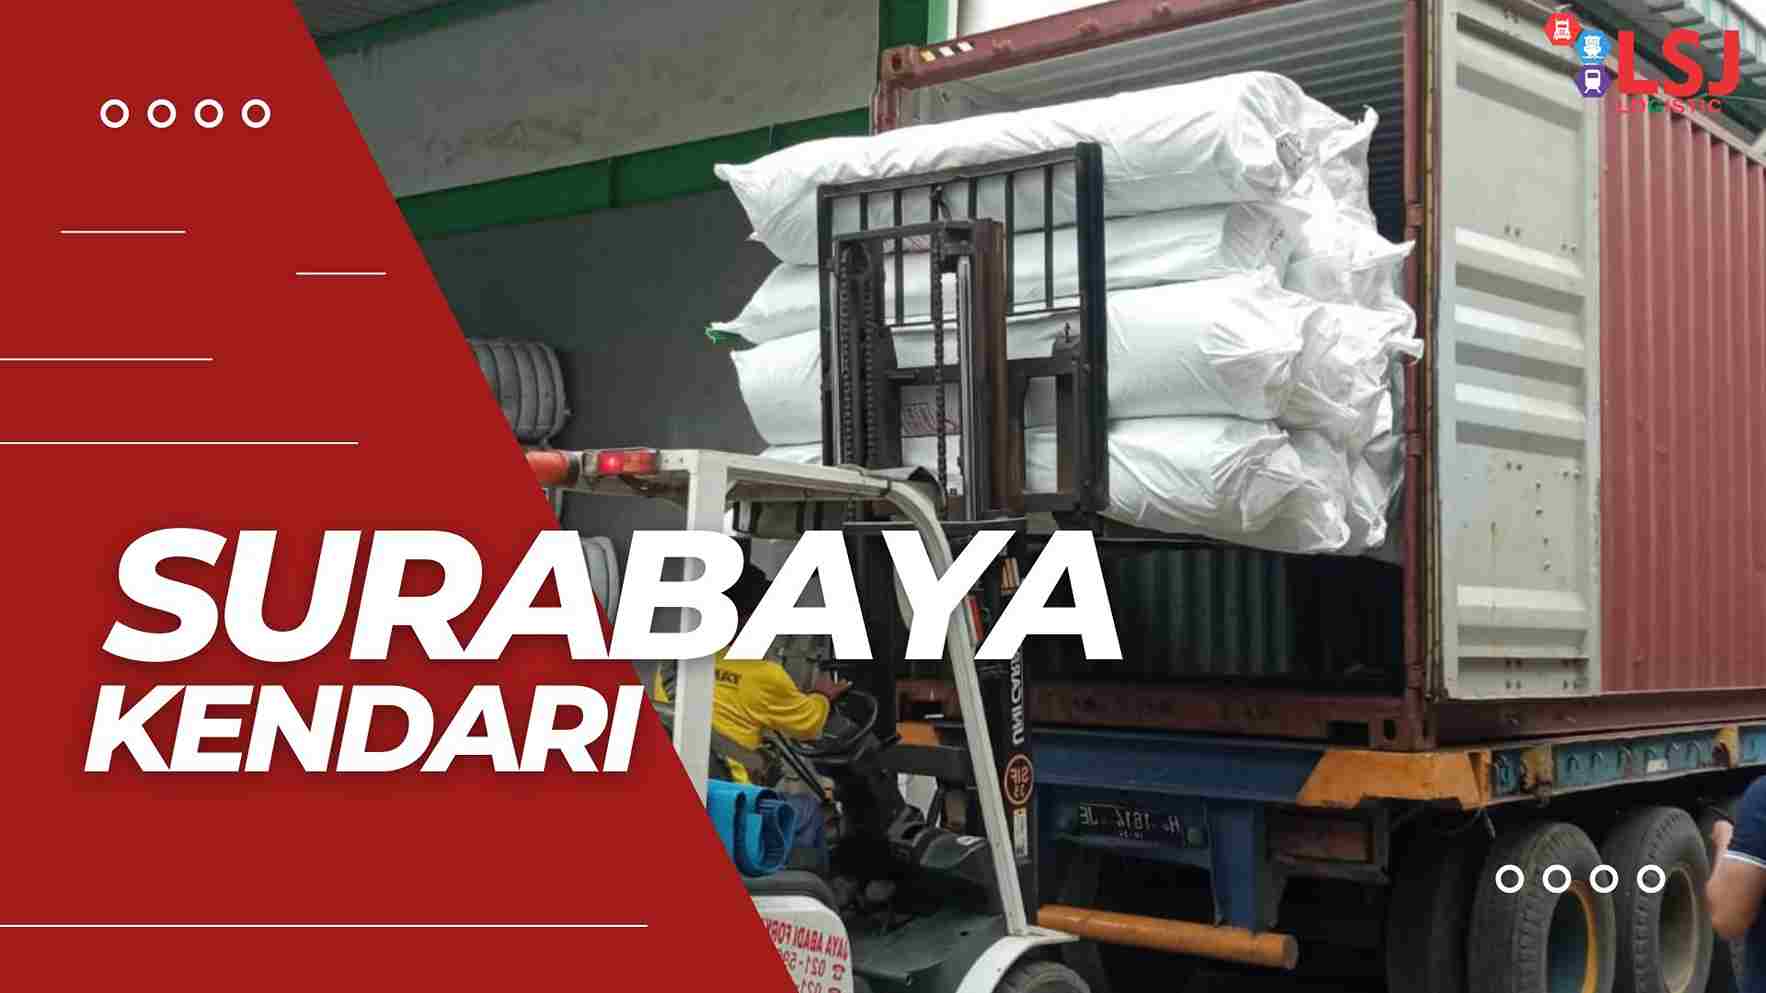 Ongkos Kirim Container Surabaya Kendari